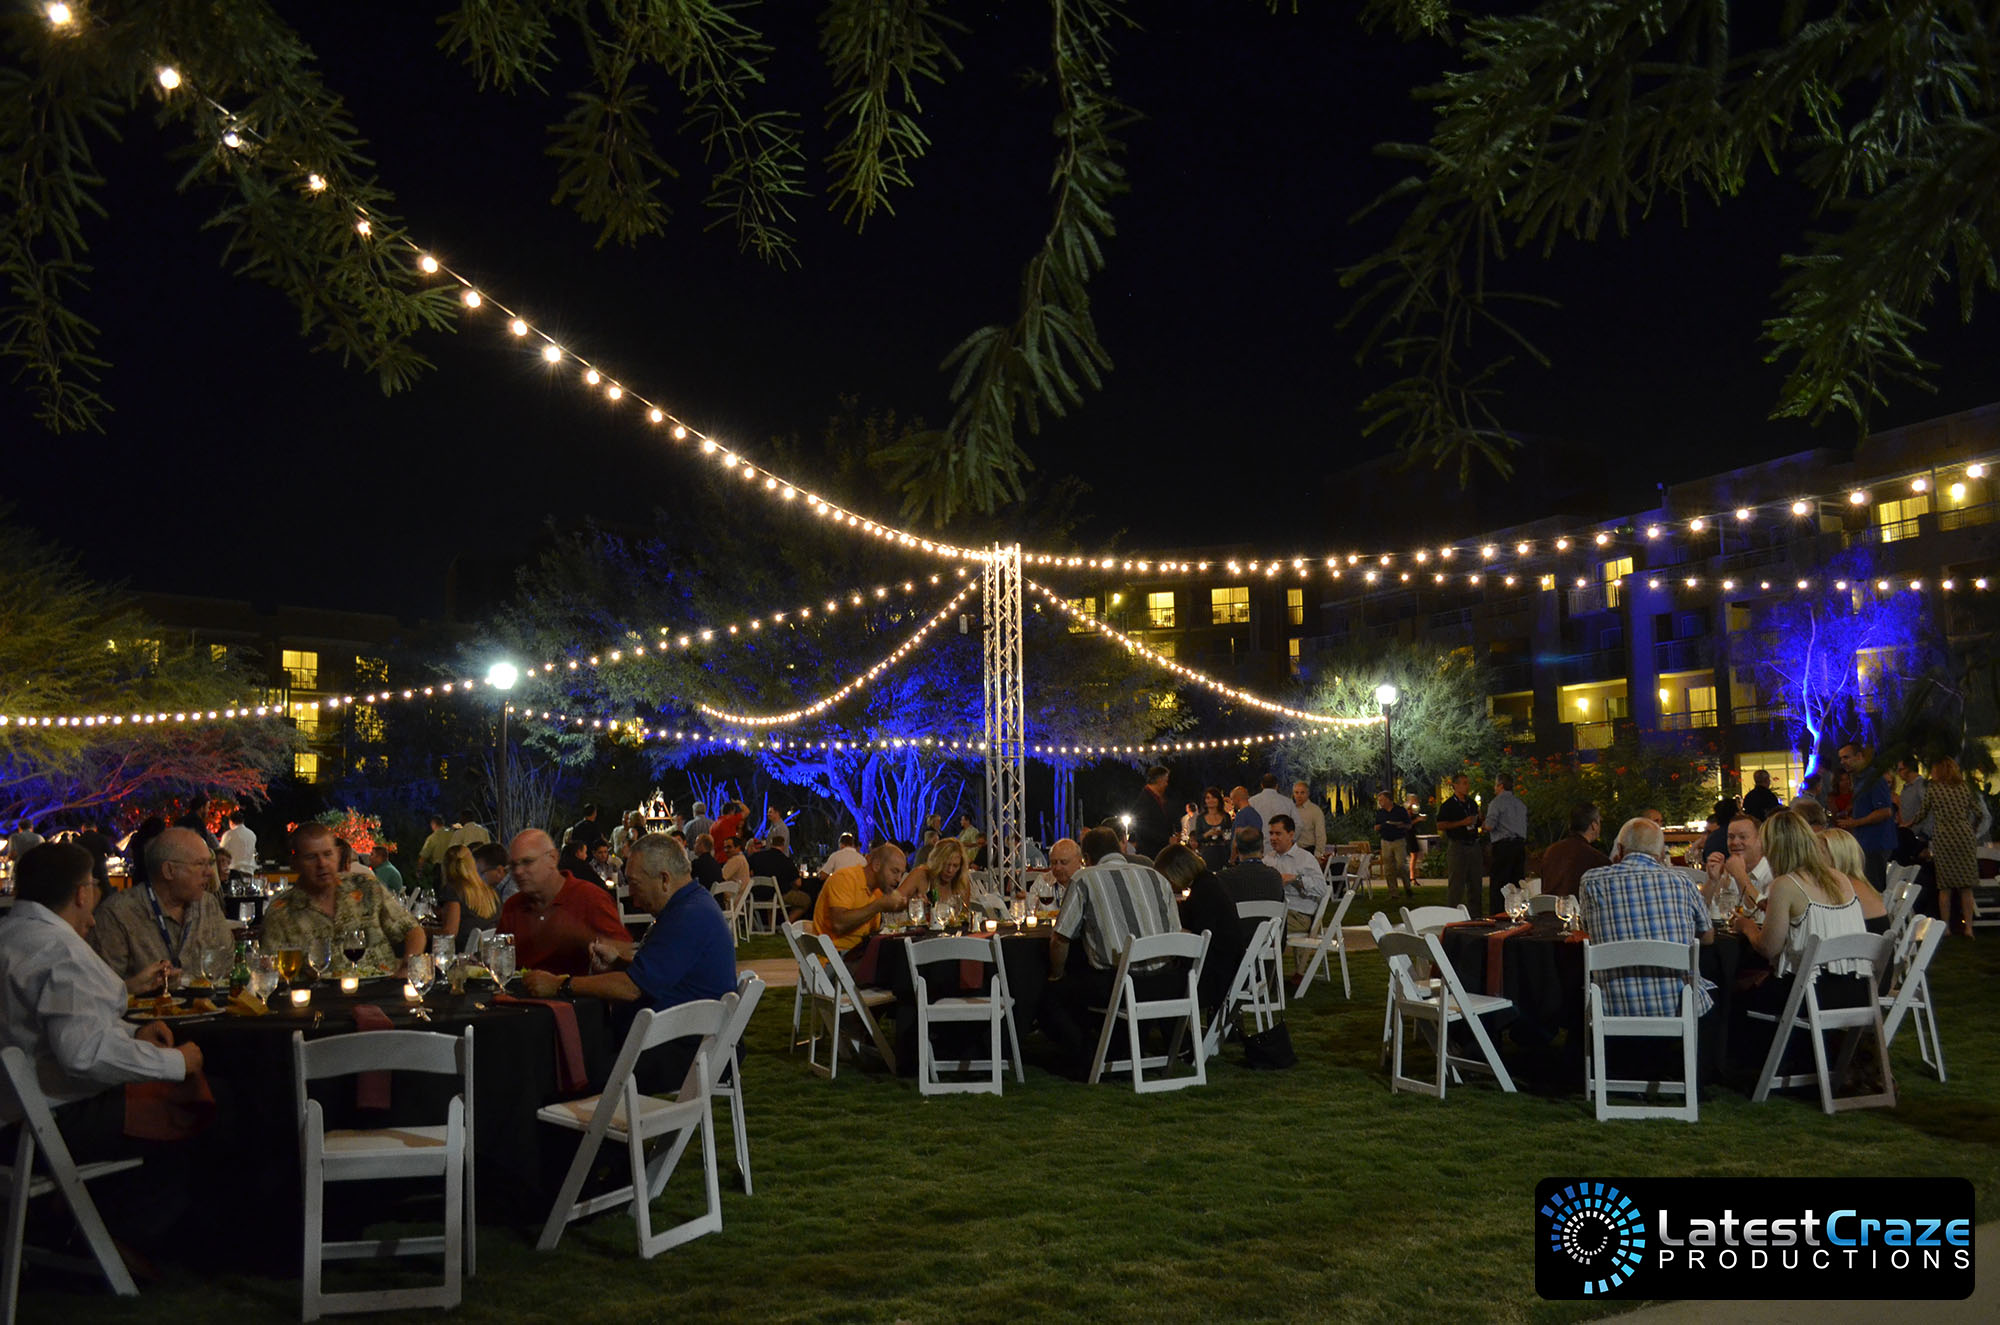 market bistro string lighting corporate event jw marriott desert ridge ballroom lawn Latest Craze Productions